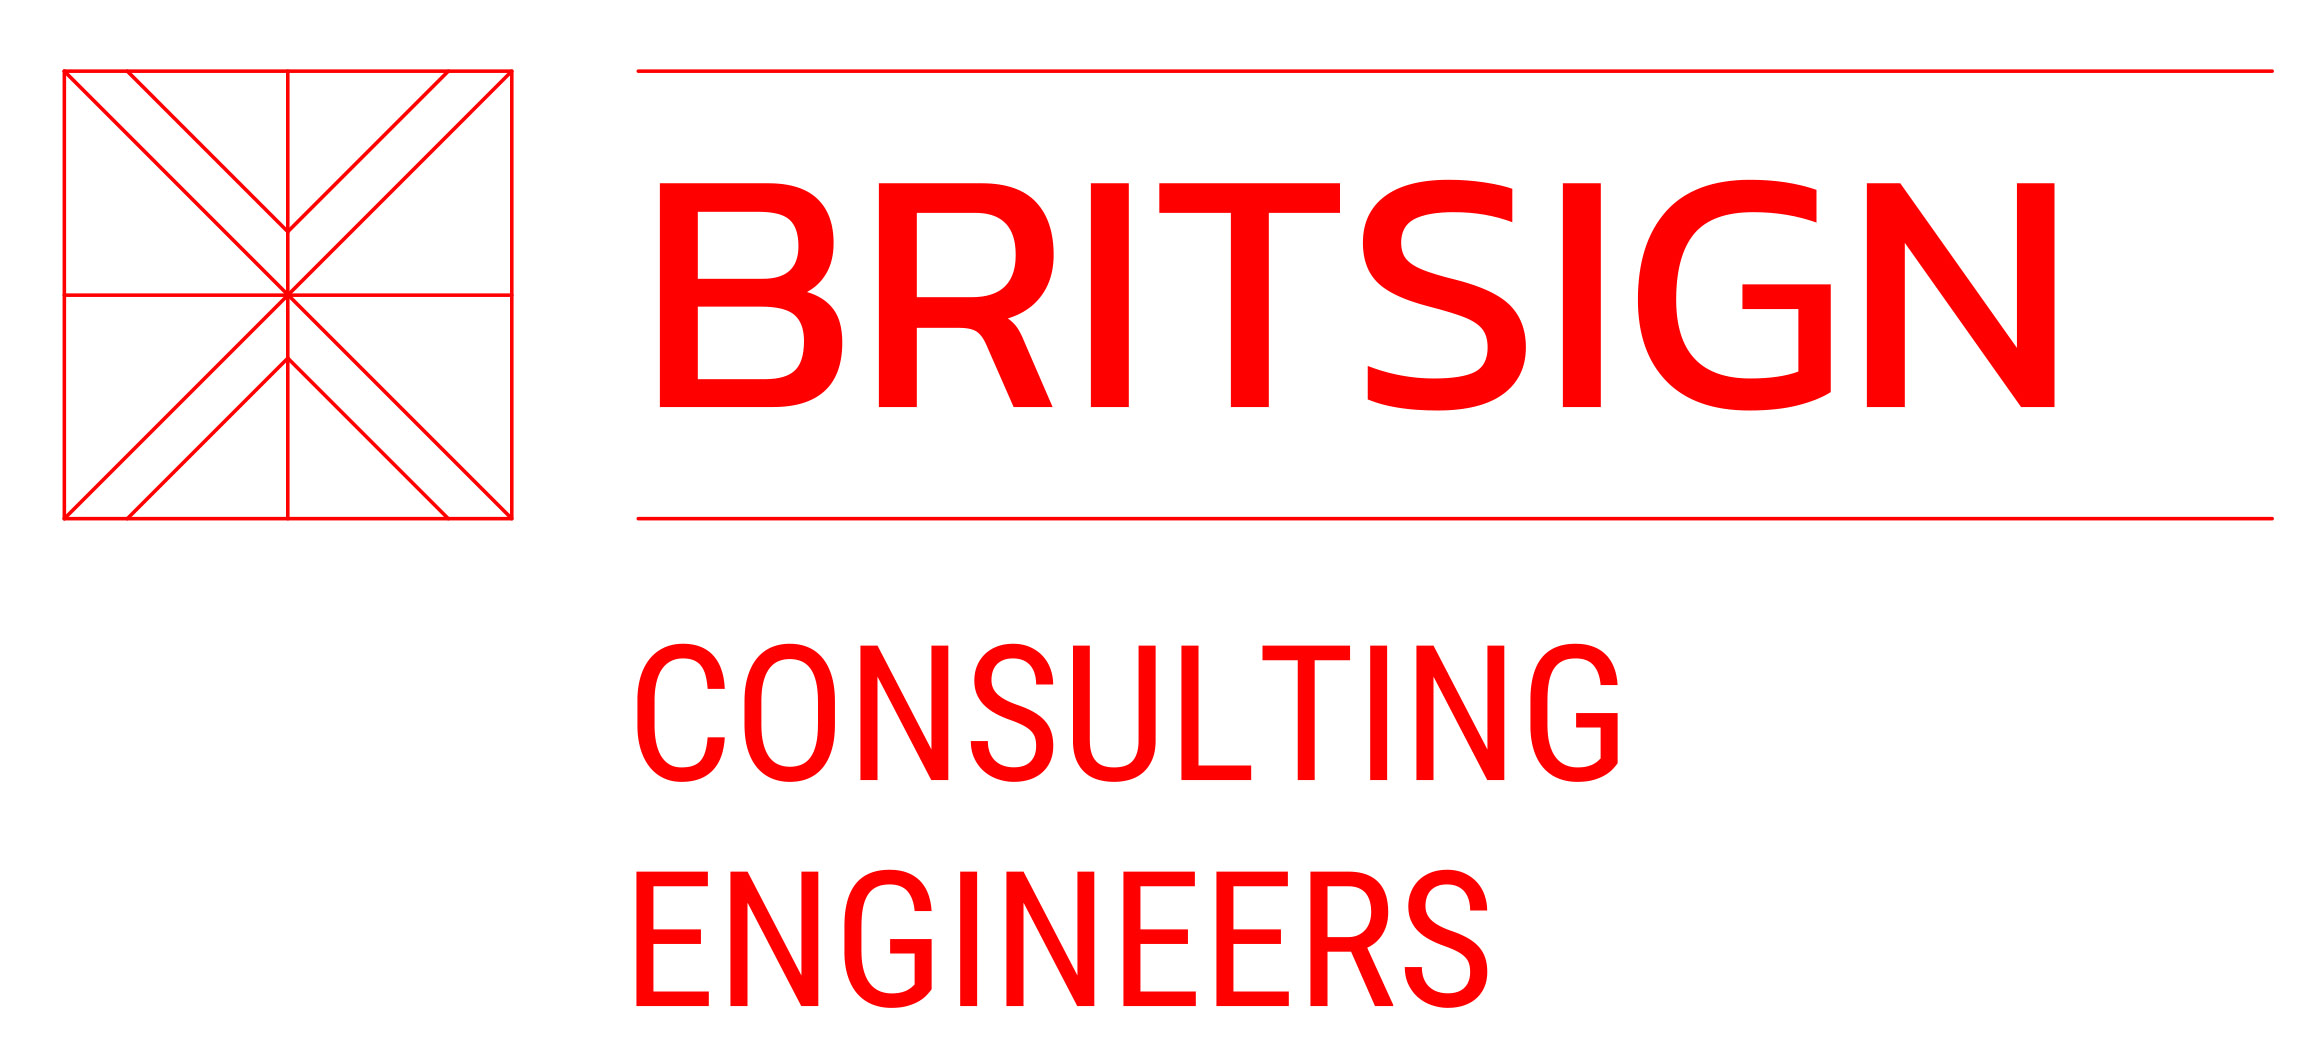 Britsign Ltd.